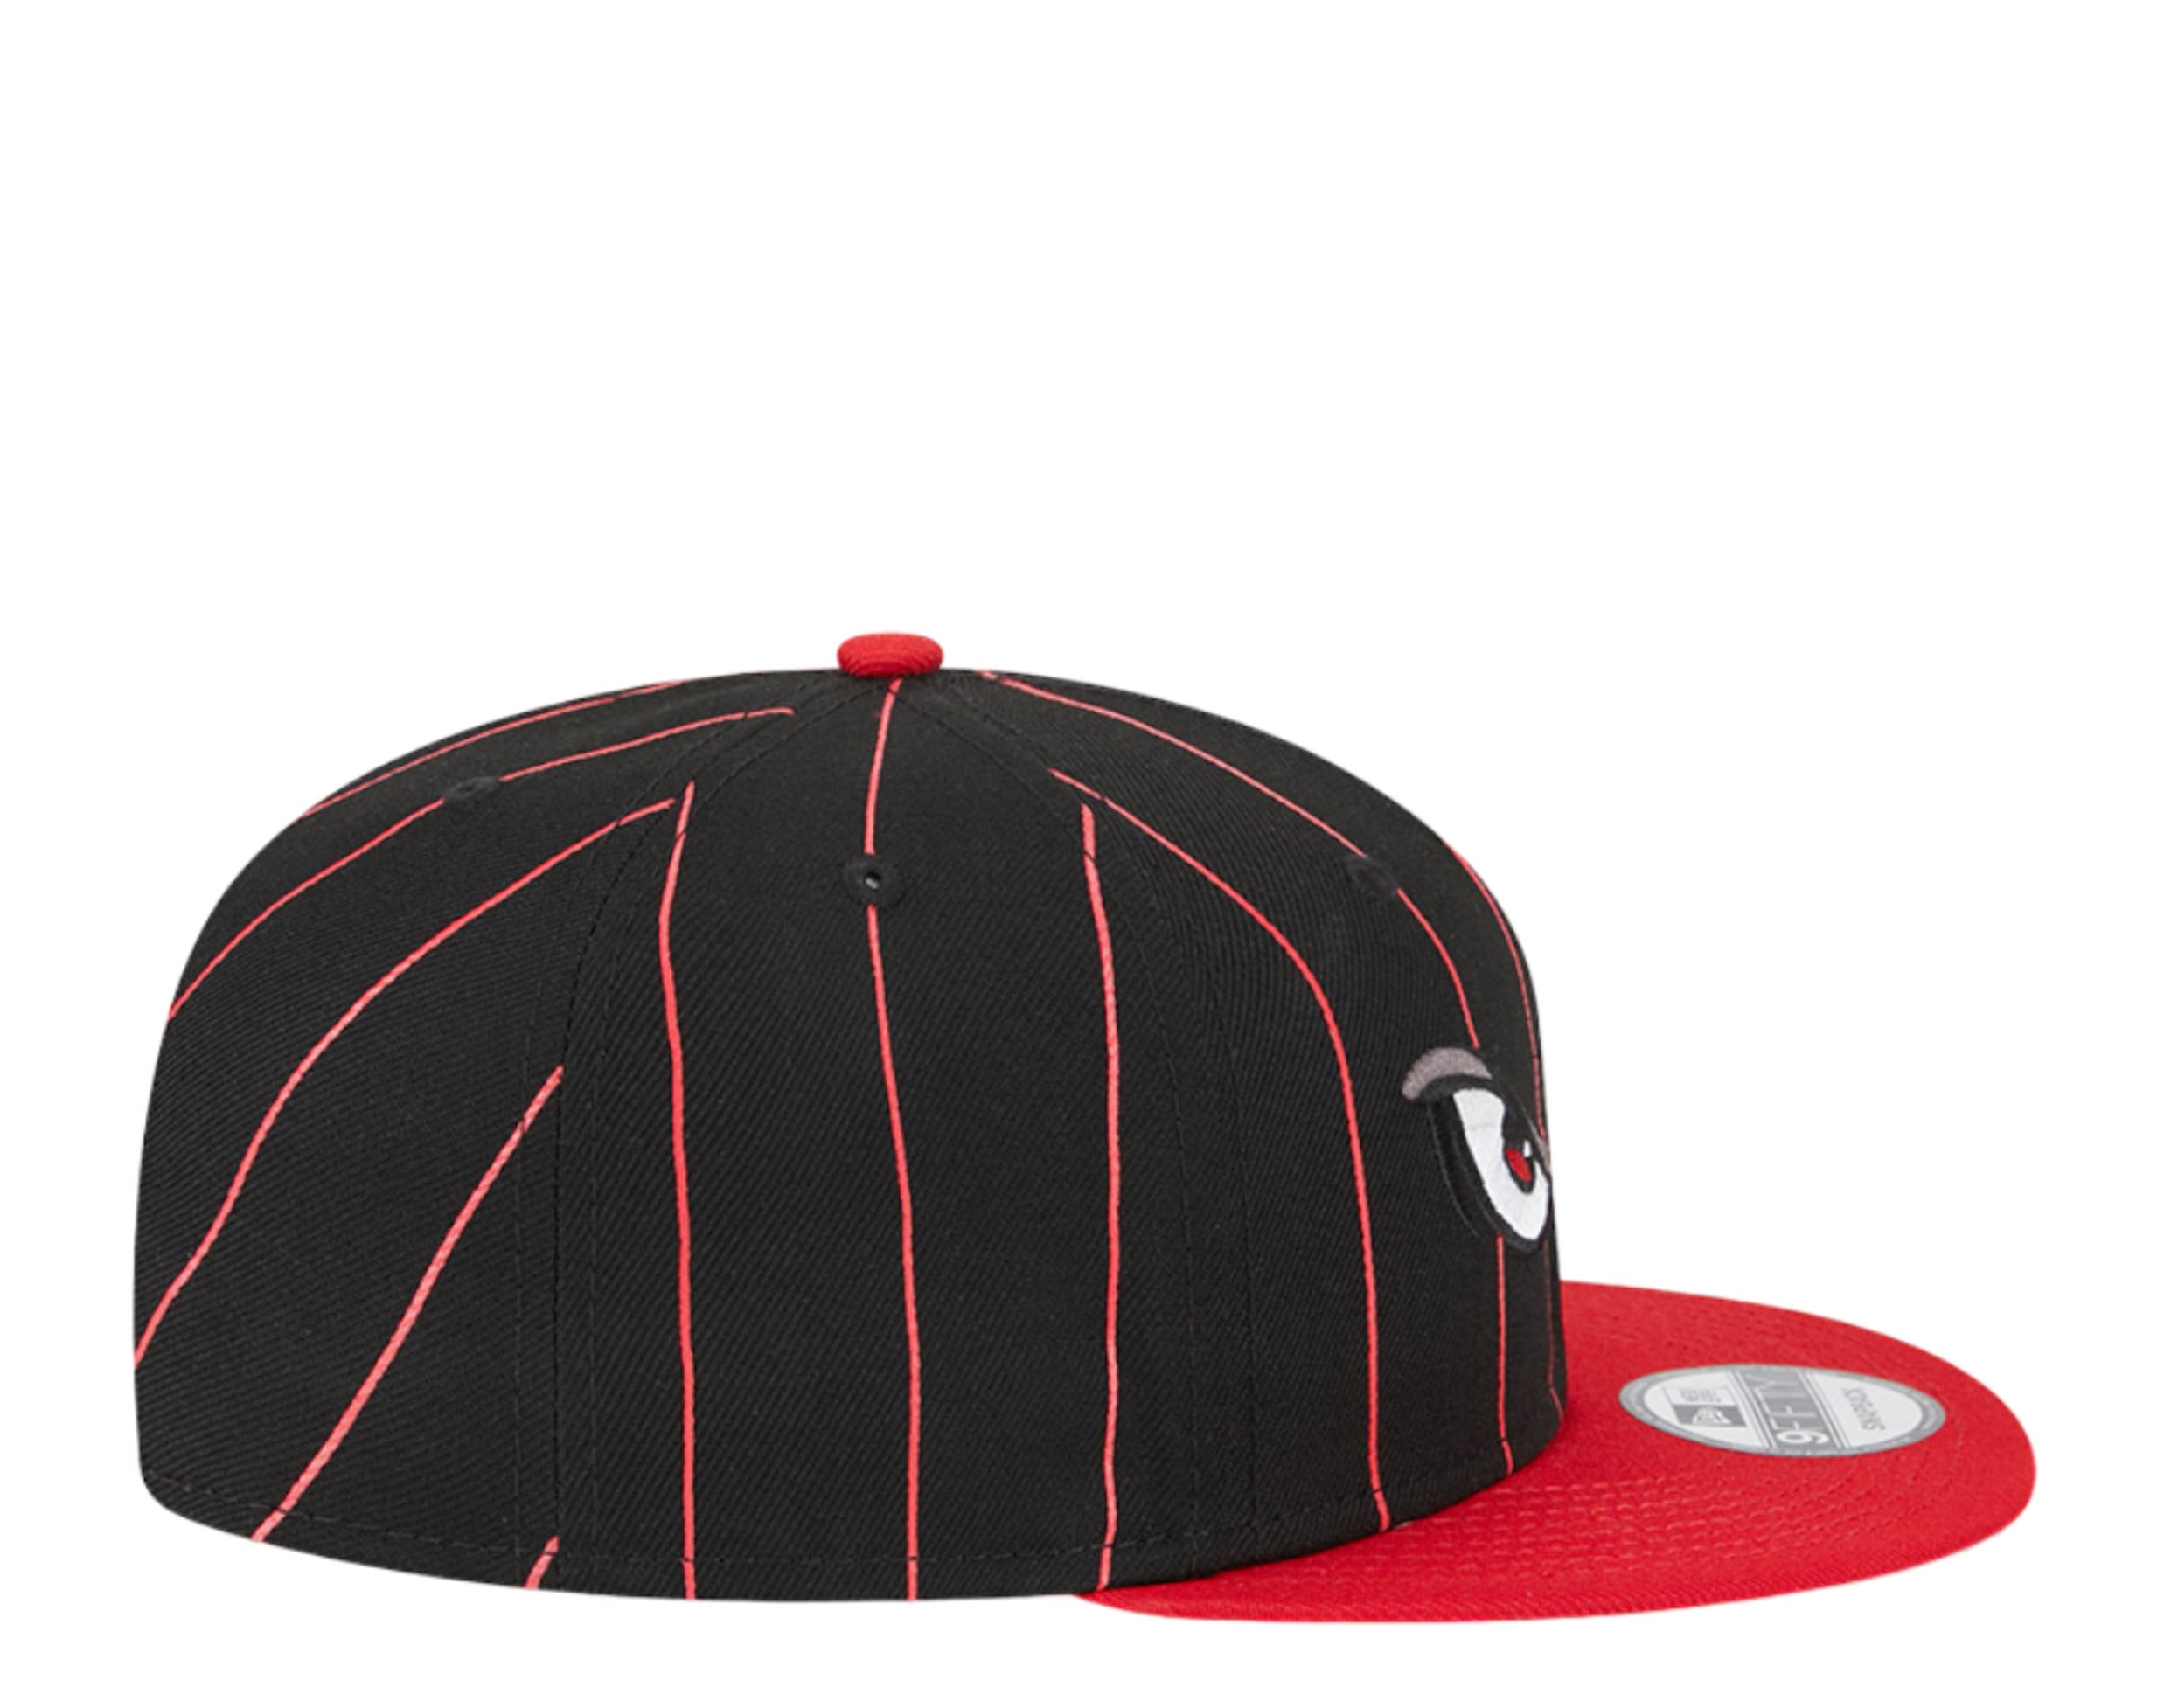 Calgary Flames Baseball Hat Cap by NewEra 9FIFTY Snapback Red and Black